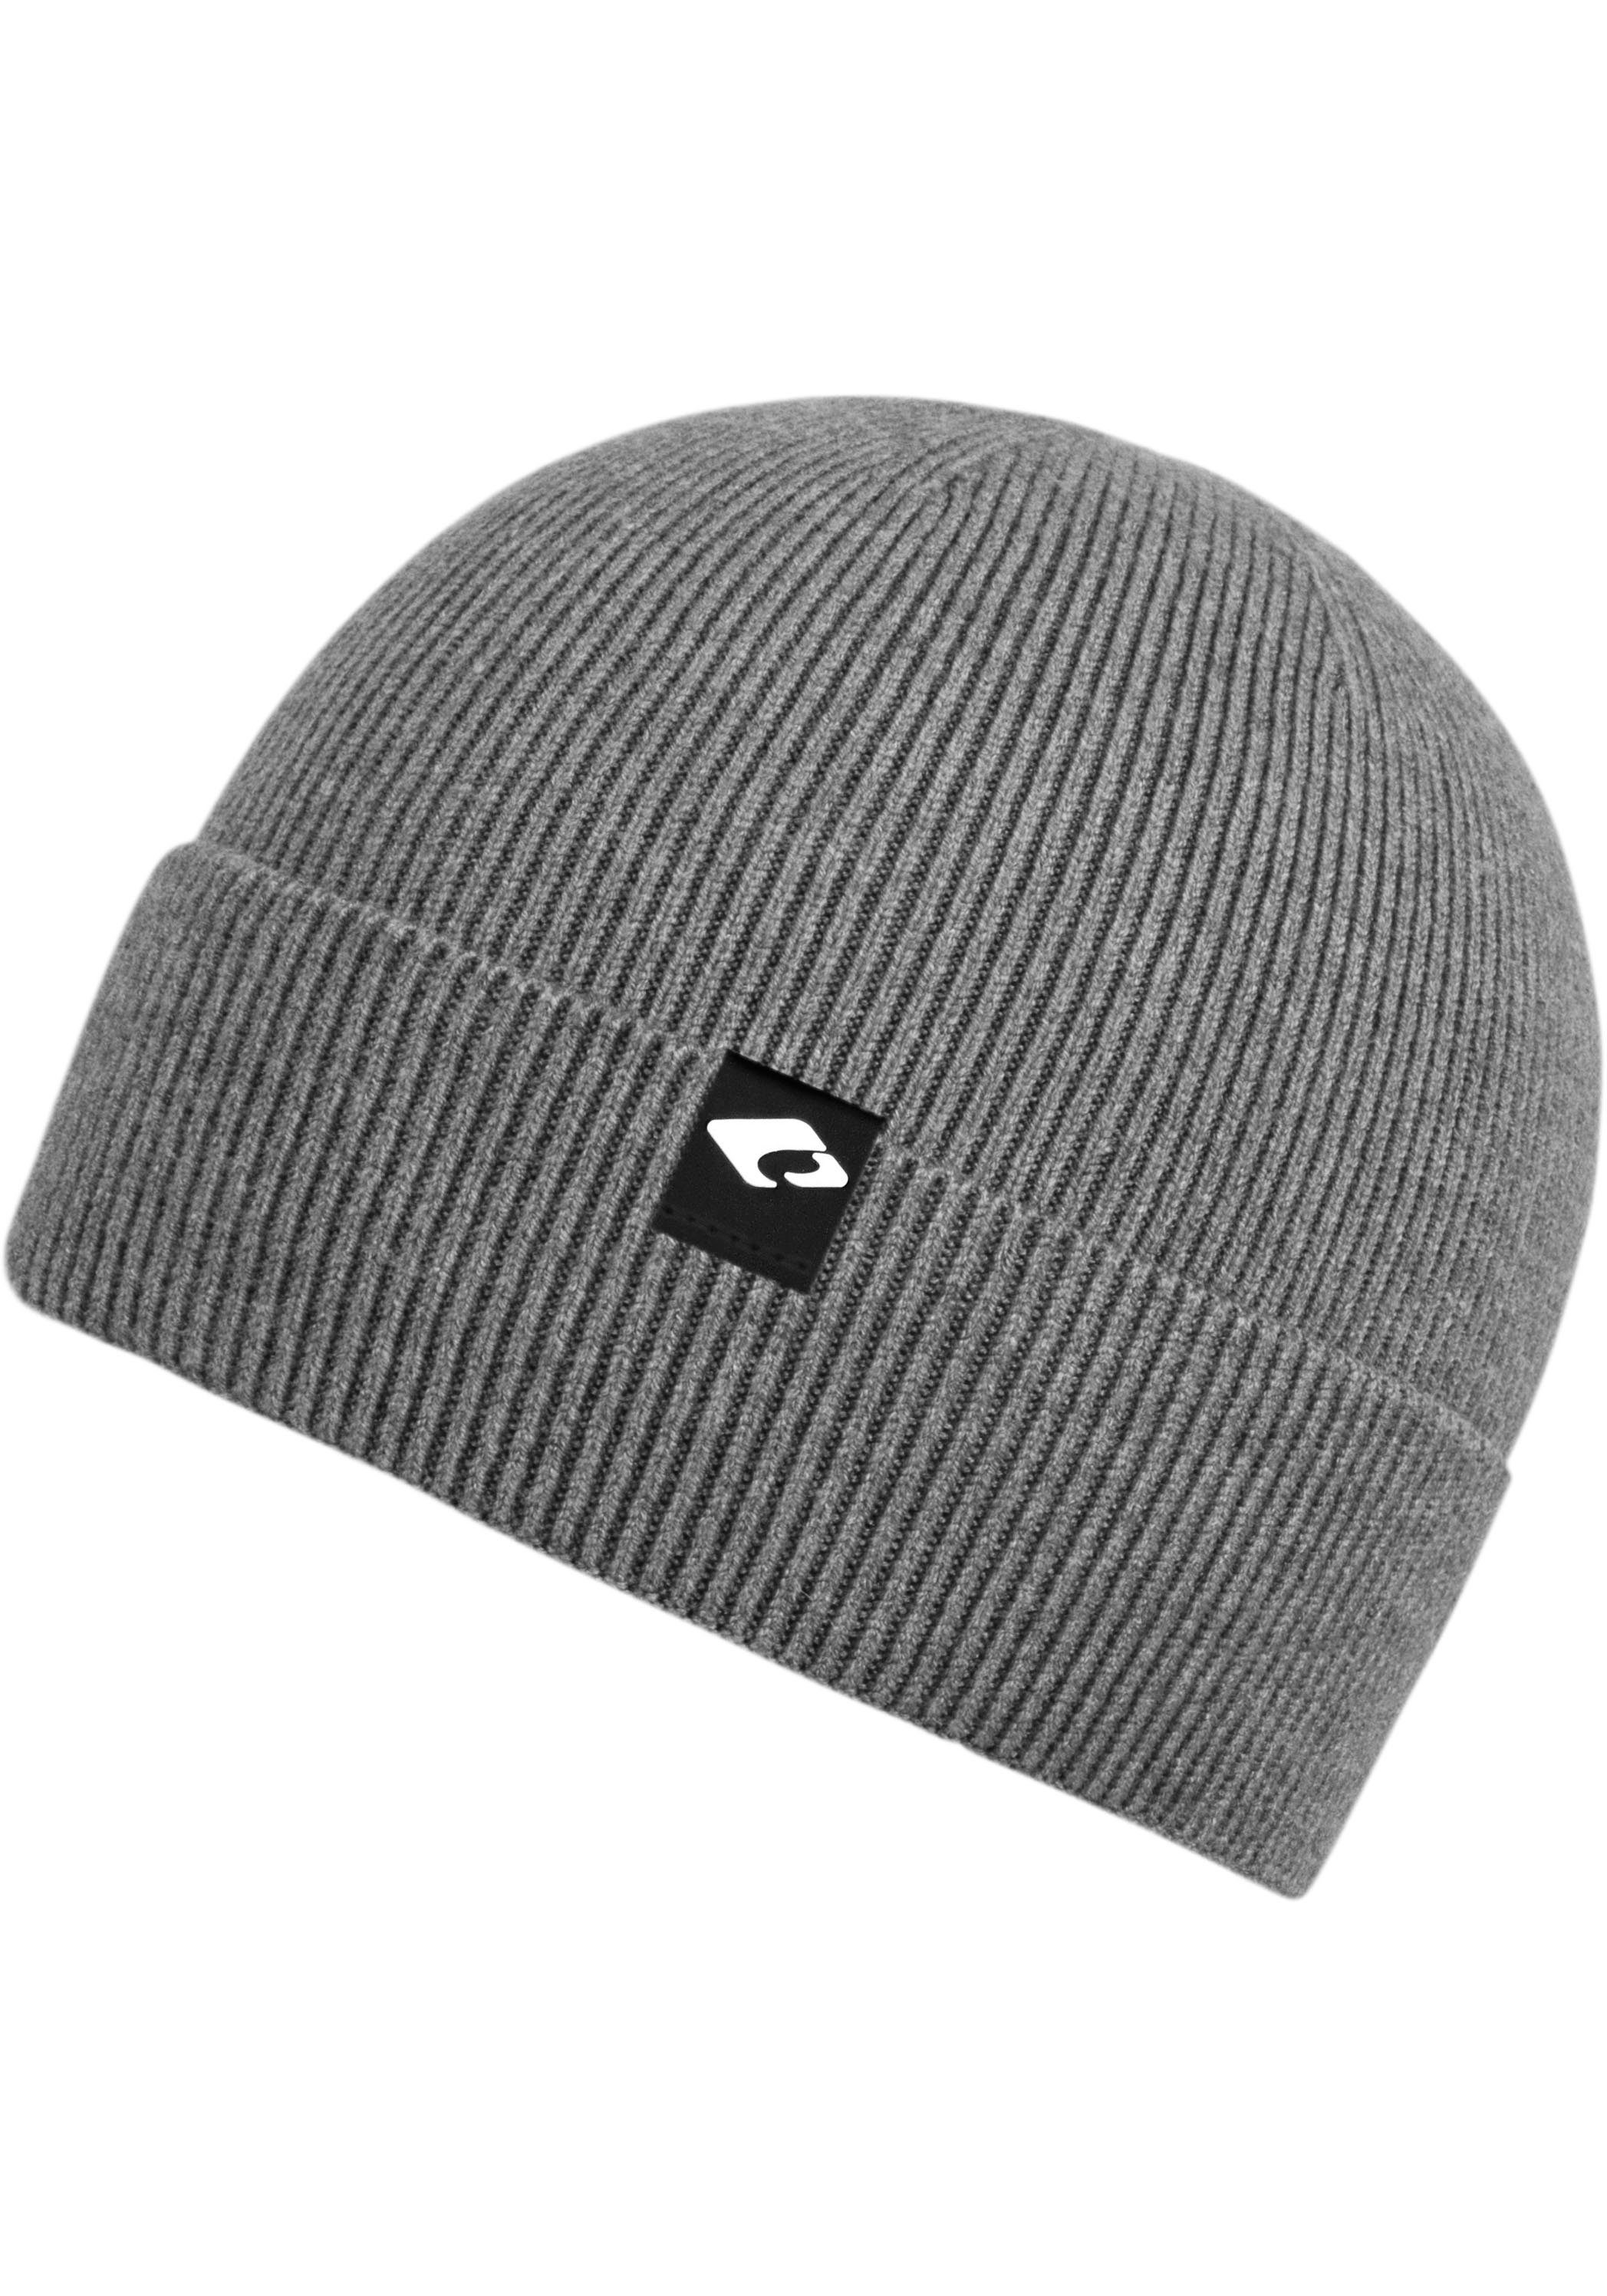 Feiner Cyrill grey chillouts Strickmütze Rippenstrick Hat